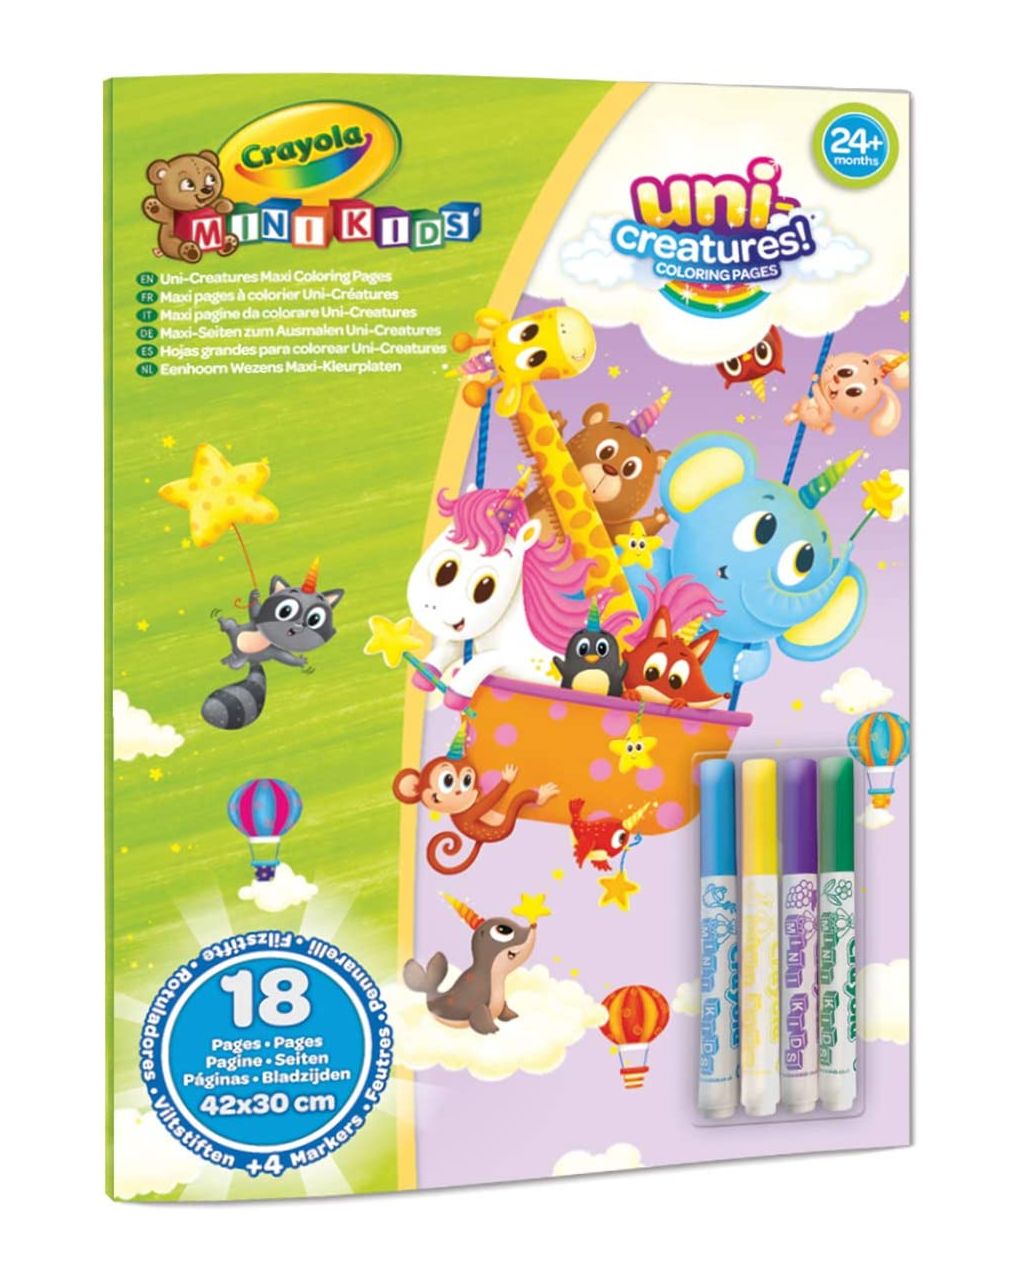 Set maxi pagine da colorare uni-creatures e pennarelli lavabili - crayola mini kids - Crayola